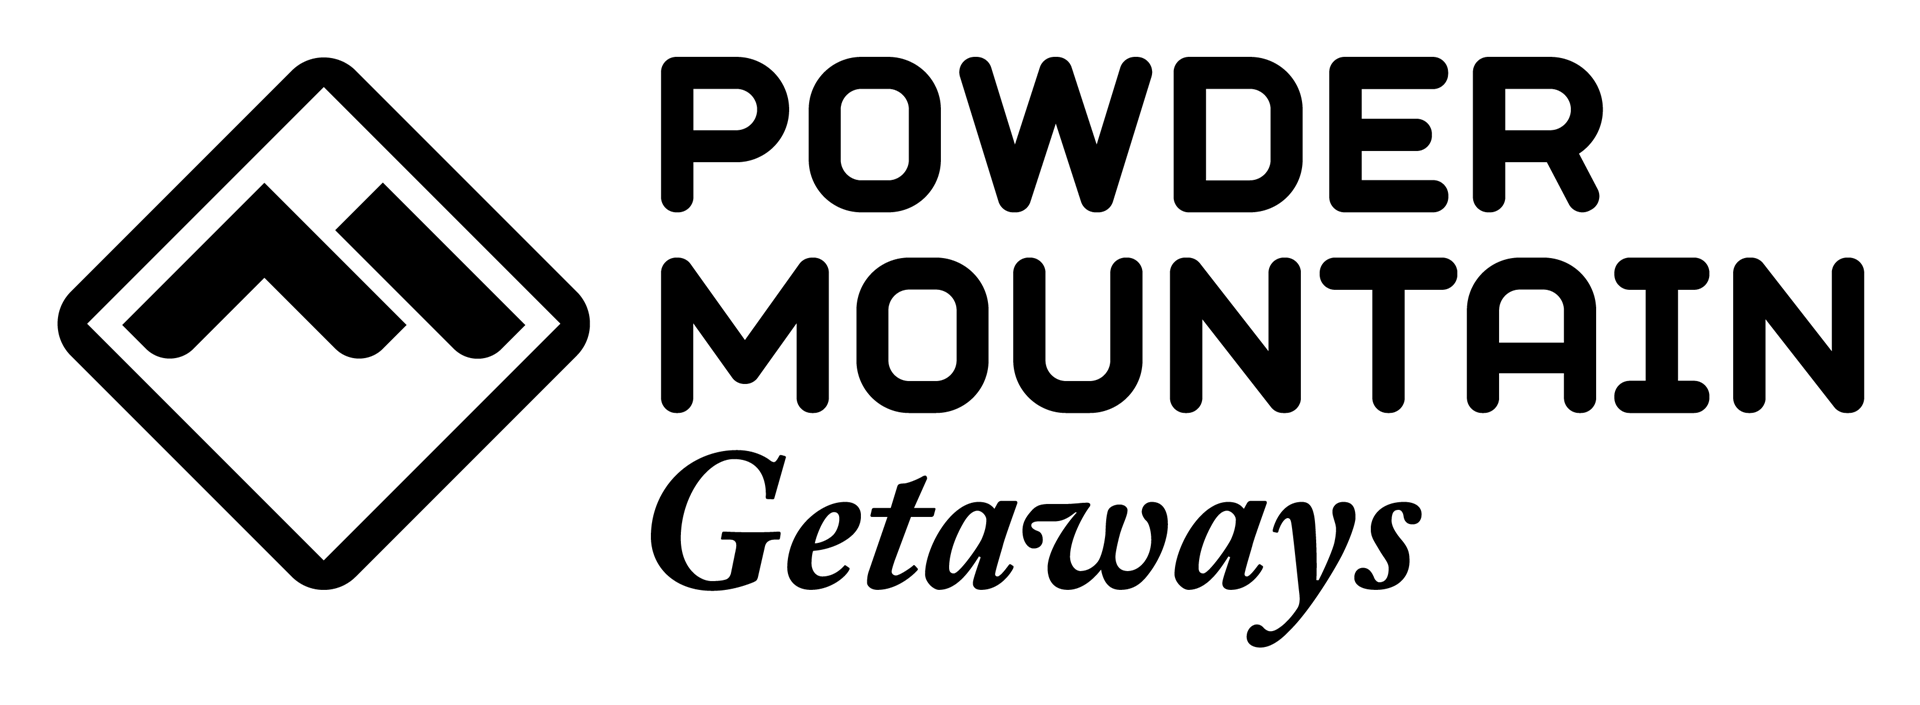 Powder Mountain Logo - Powder Mountain Lodging